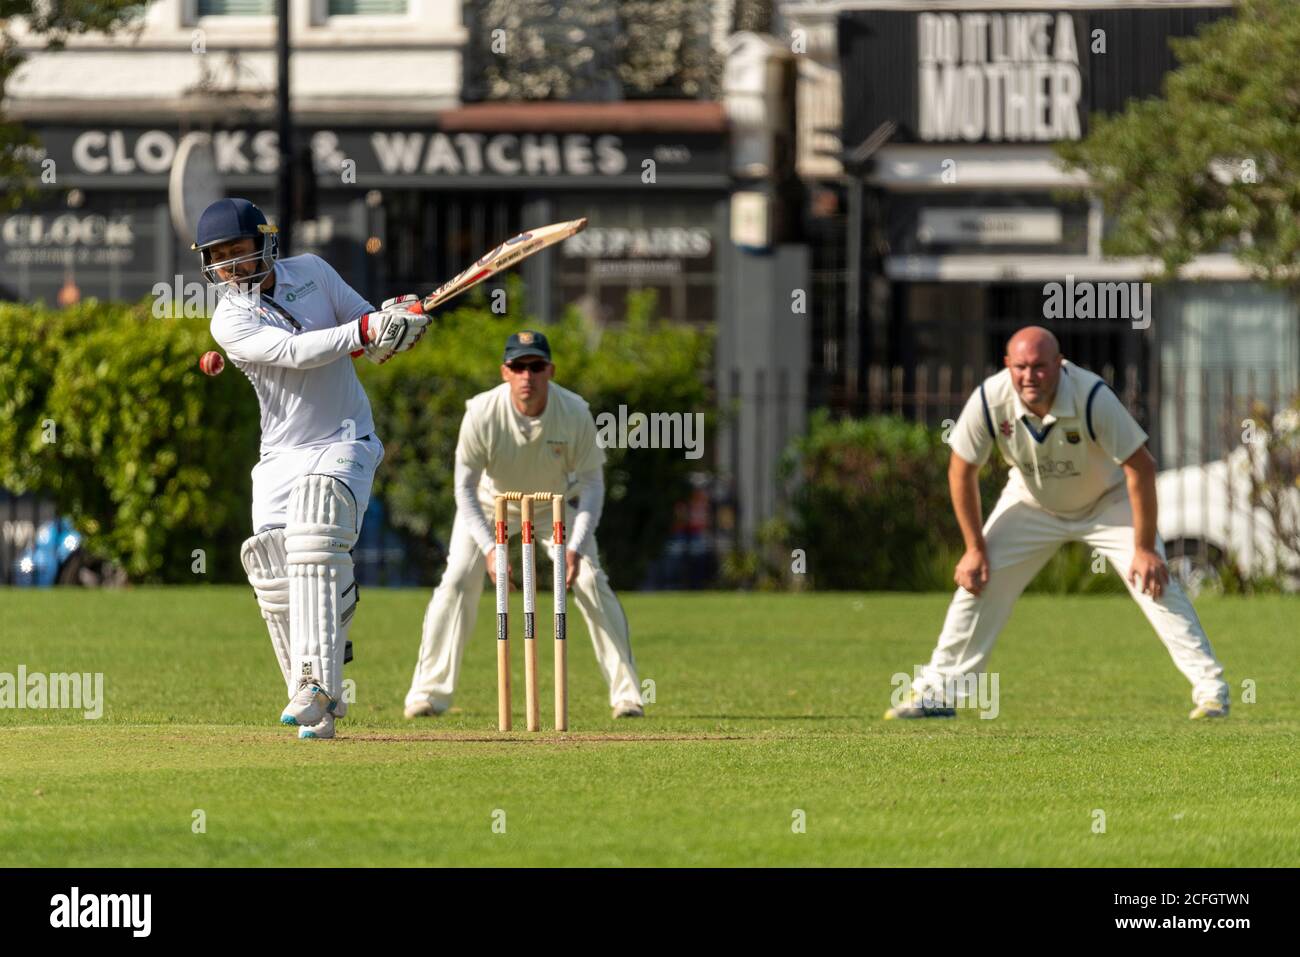 Cricket being played in Chalkwell Park, Westcliff on Sea, Southend, Essex, UK. Belhus Cricket Club batsman batting, with slips fielding Stock Photo